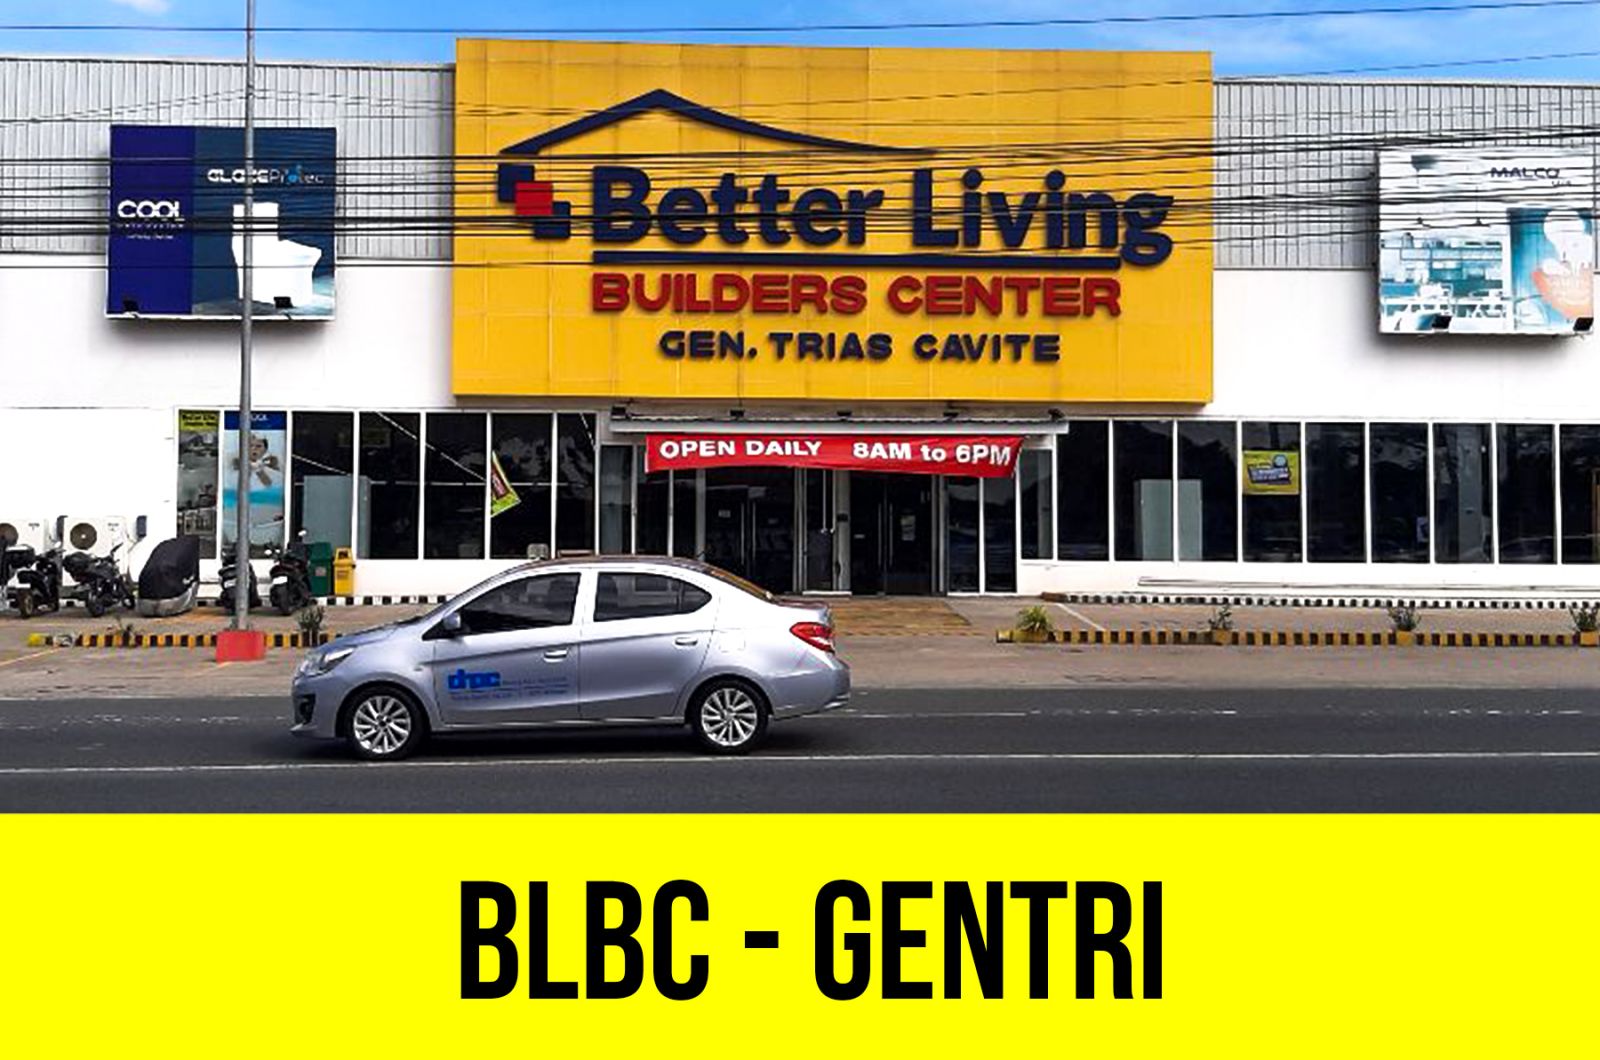 blbc Gentri - Contact details